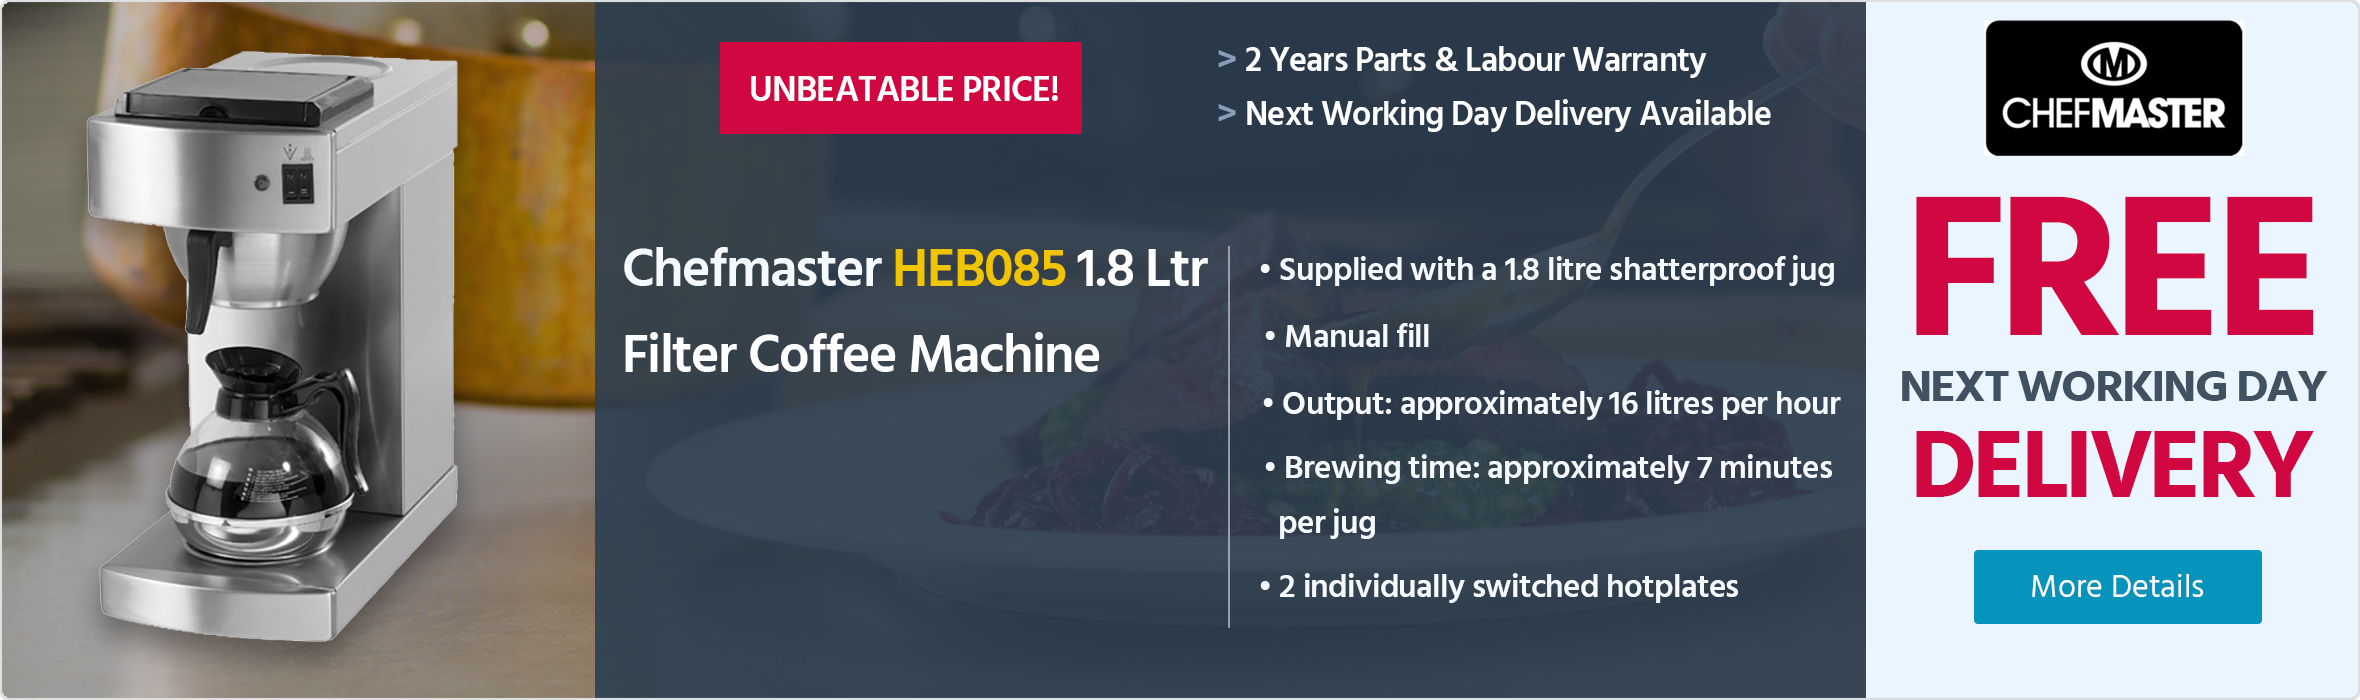 Chefmaster HEB085 1.8 Ltr Filter Coffee Machine